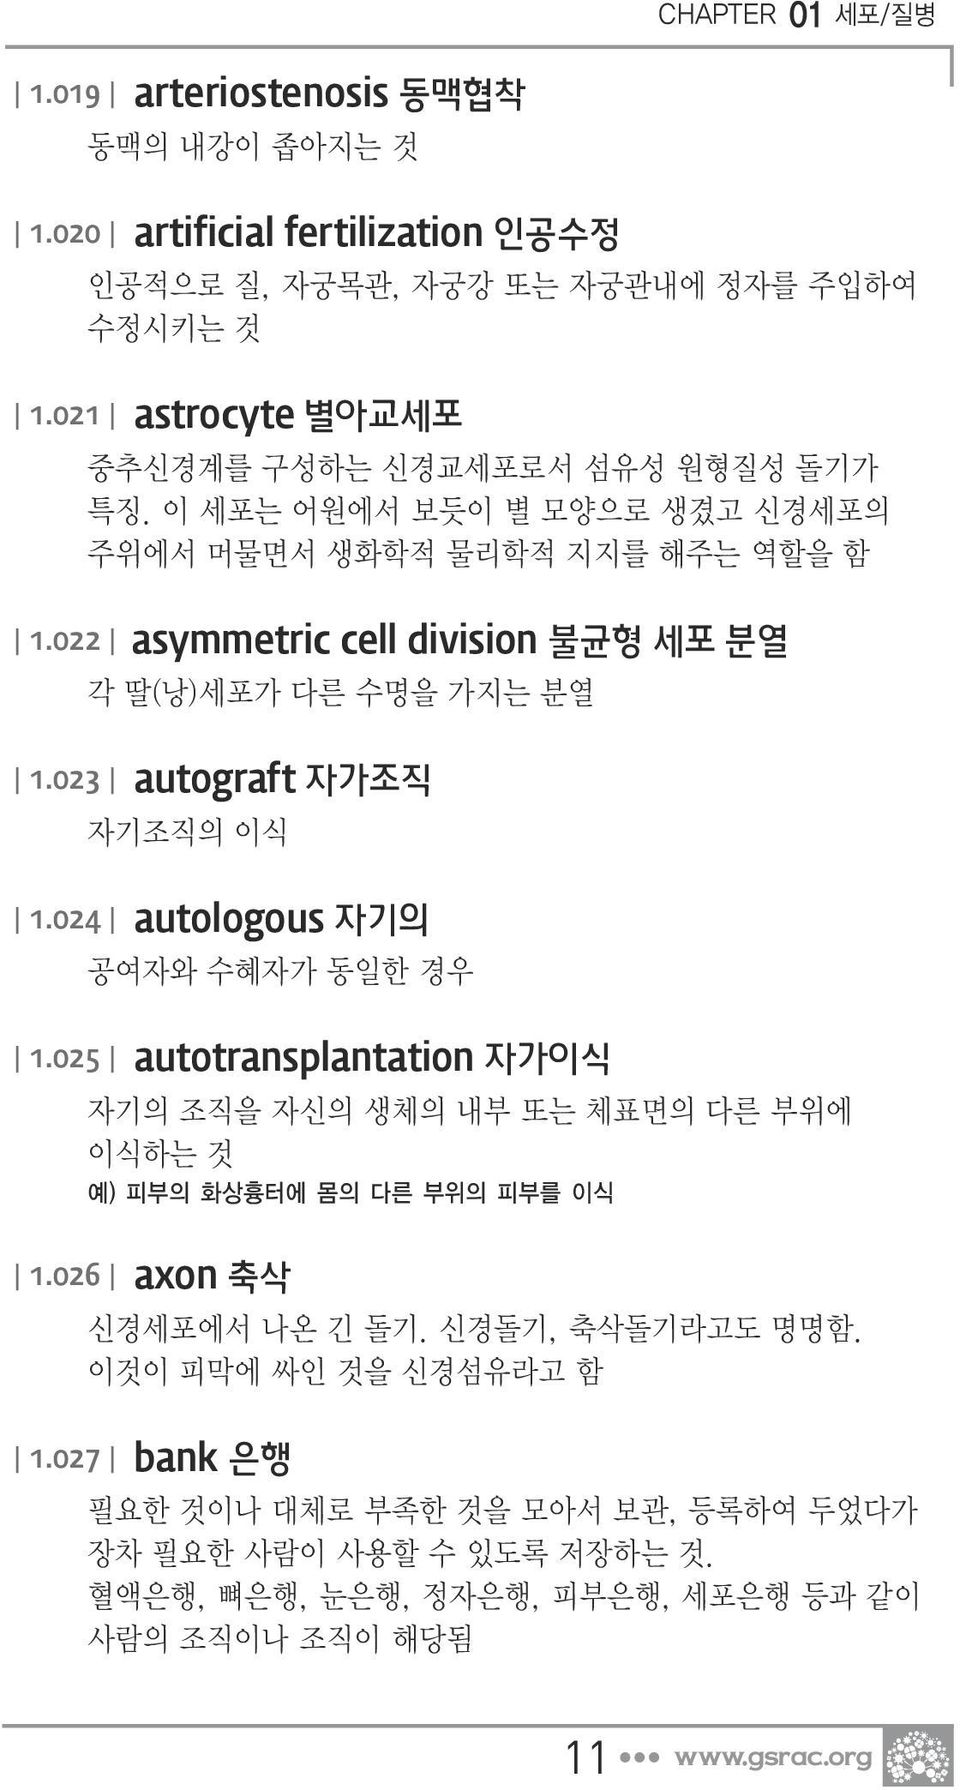 022 asymmetric cell division 불균형 세포 분열 각 딸(낭)세포가 다른 수명을 가지는 분열 1.023 autograft 자가조직 자기조직의 이식 1.024 autologous 자기의 공여자와 수혜자가 동일한 경우 1.